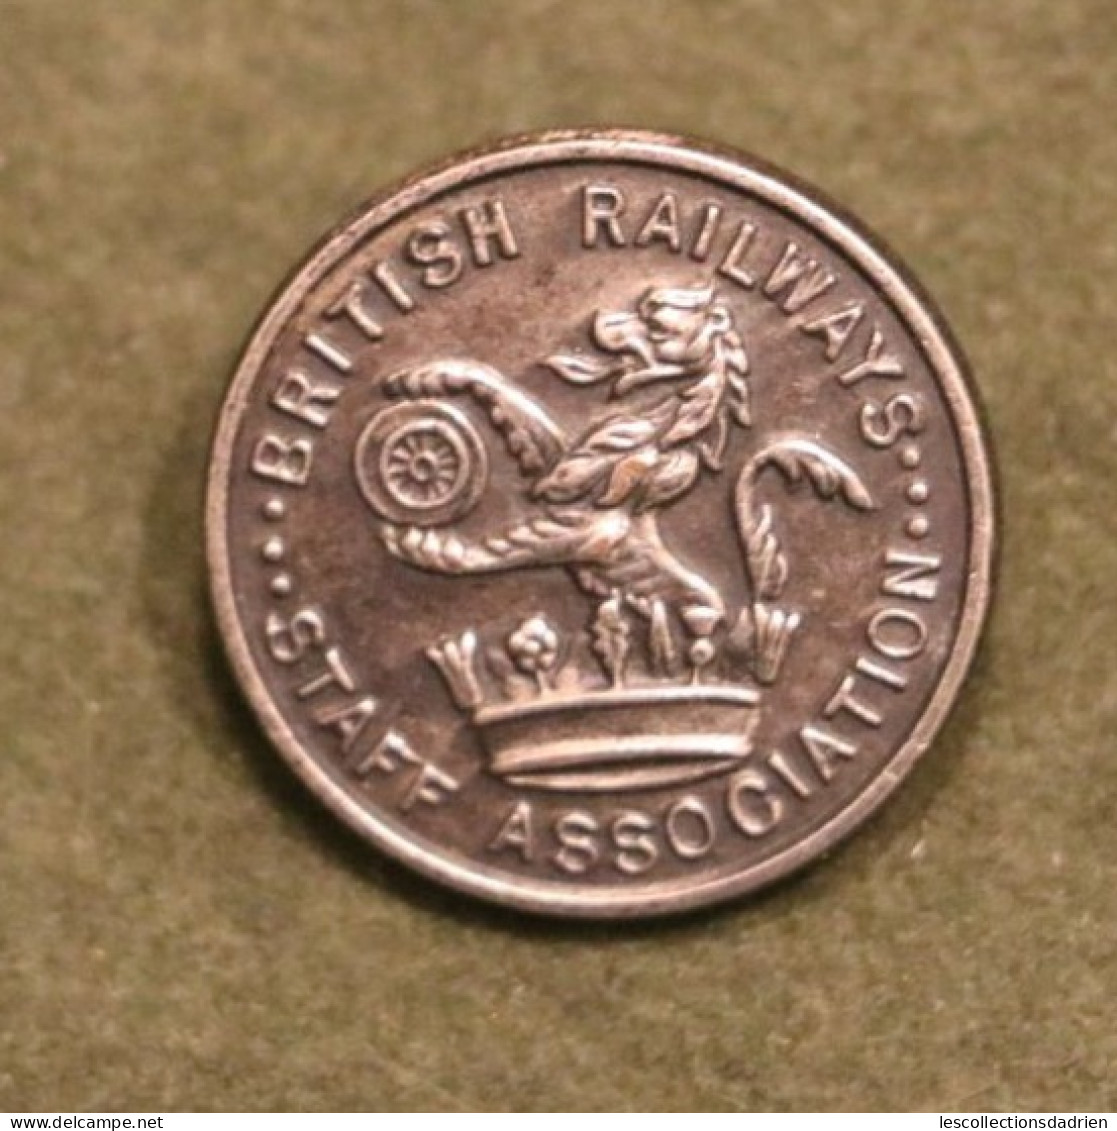 Insigne Broche British Railways Staff Association - Badge Pin Brooch - Train - Railway